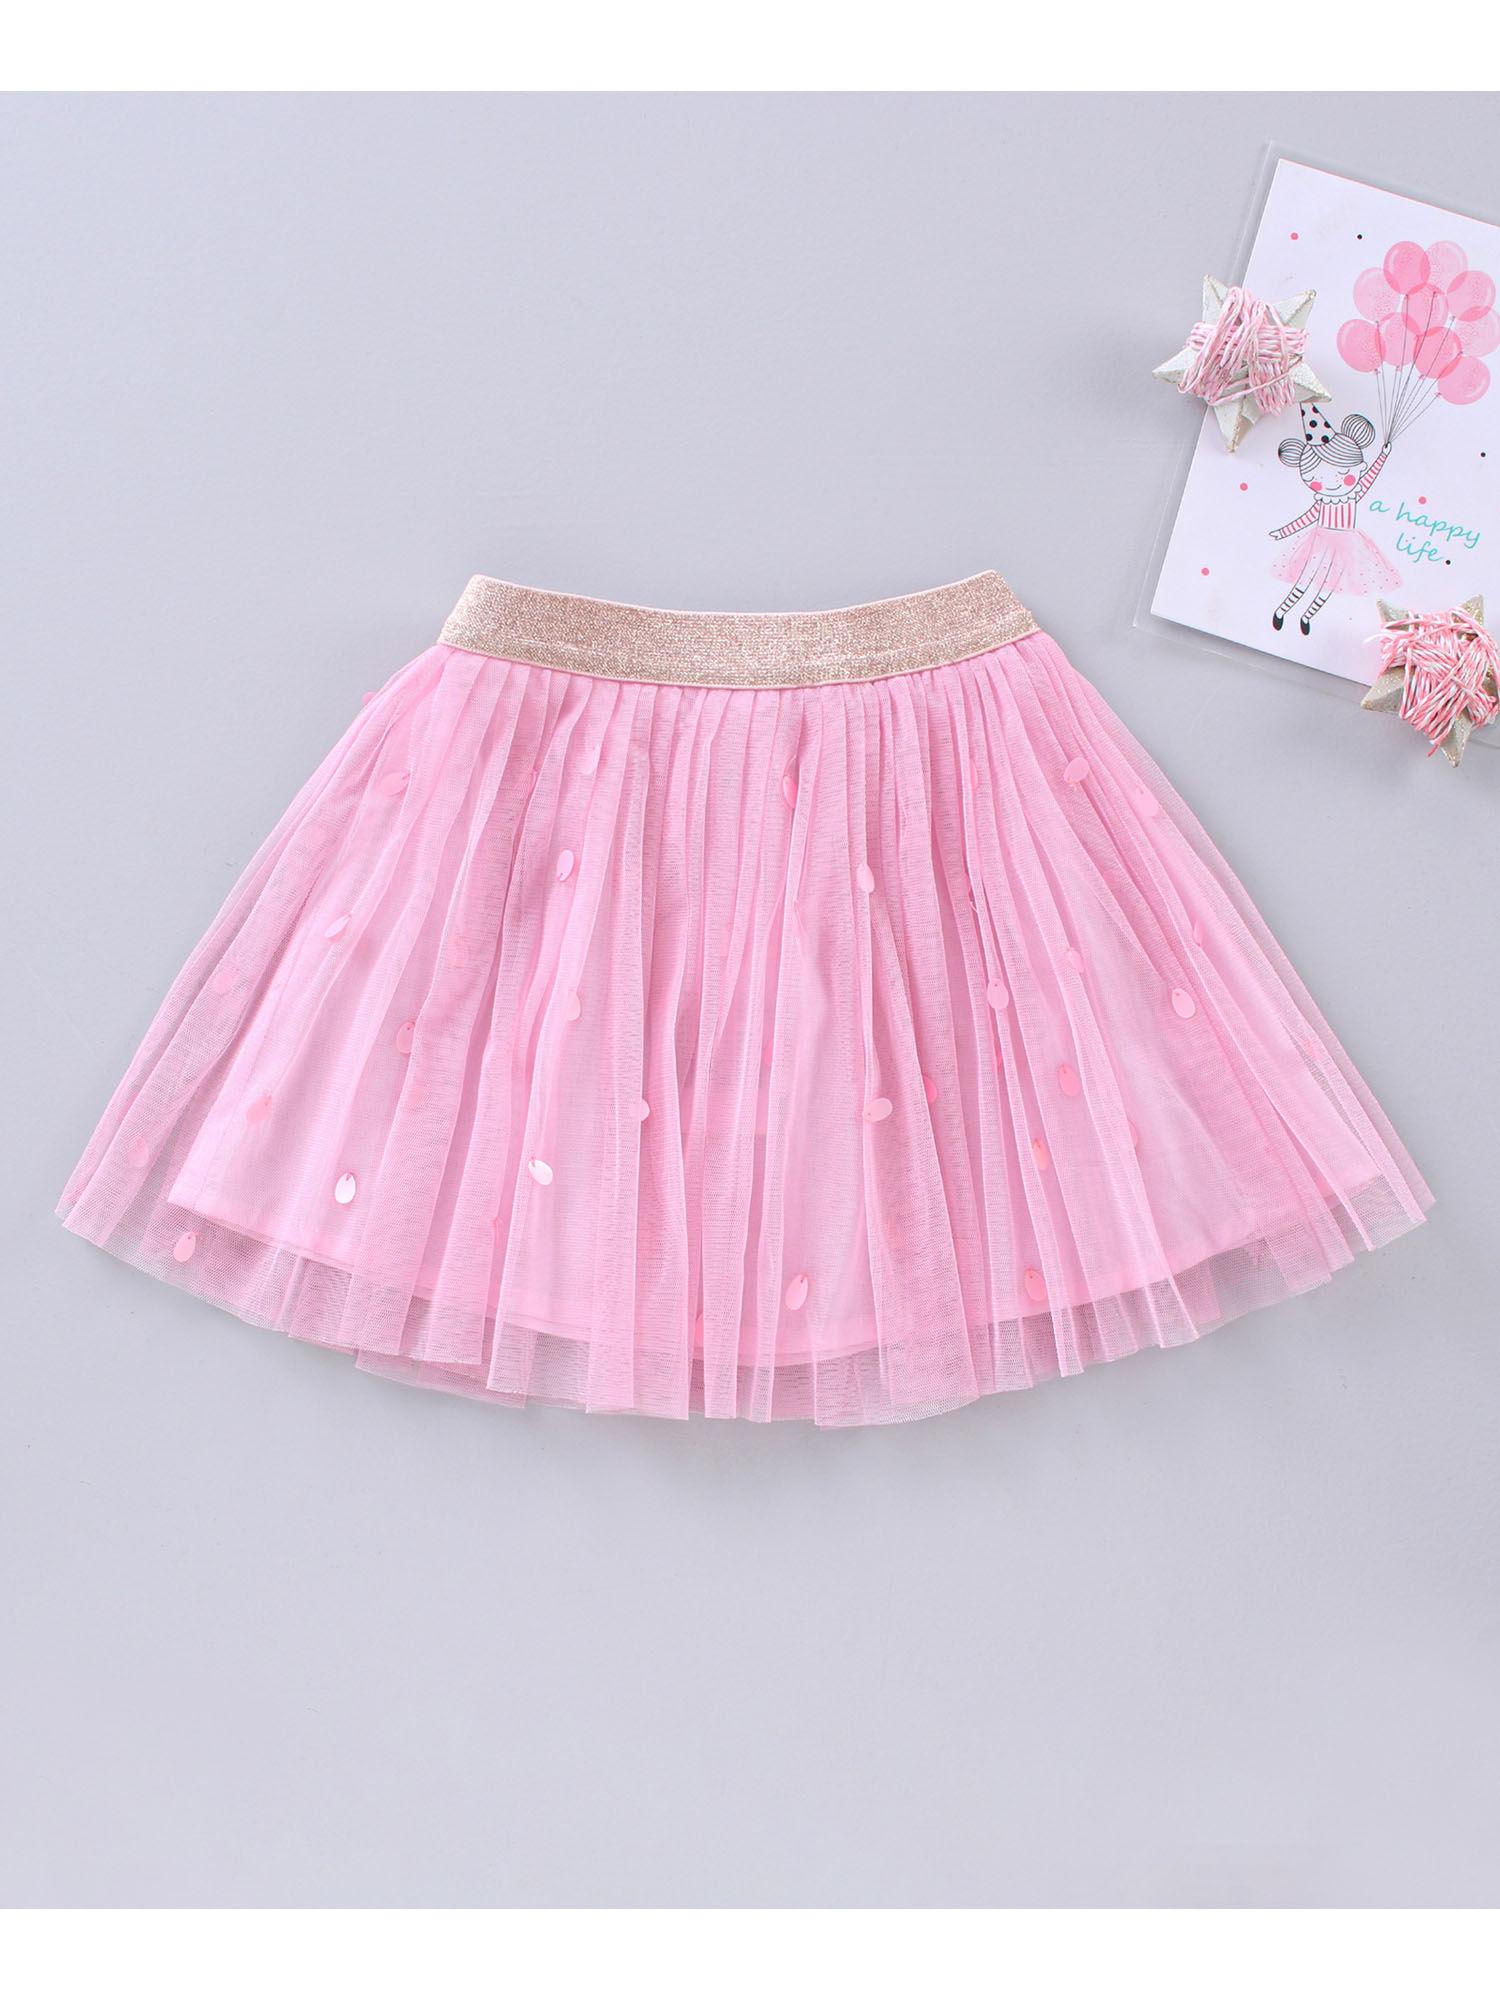 pink-sequin-tutu-skirt